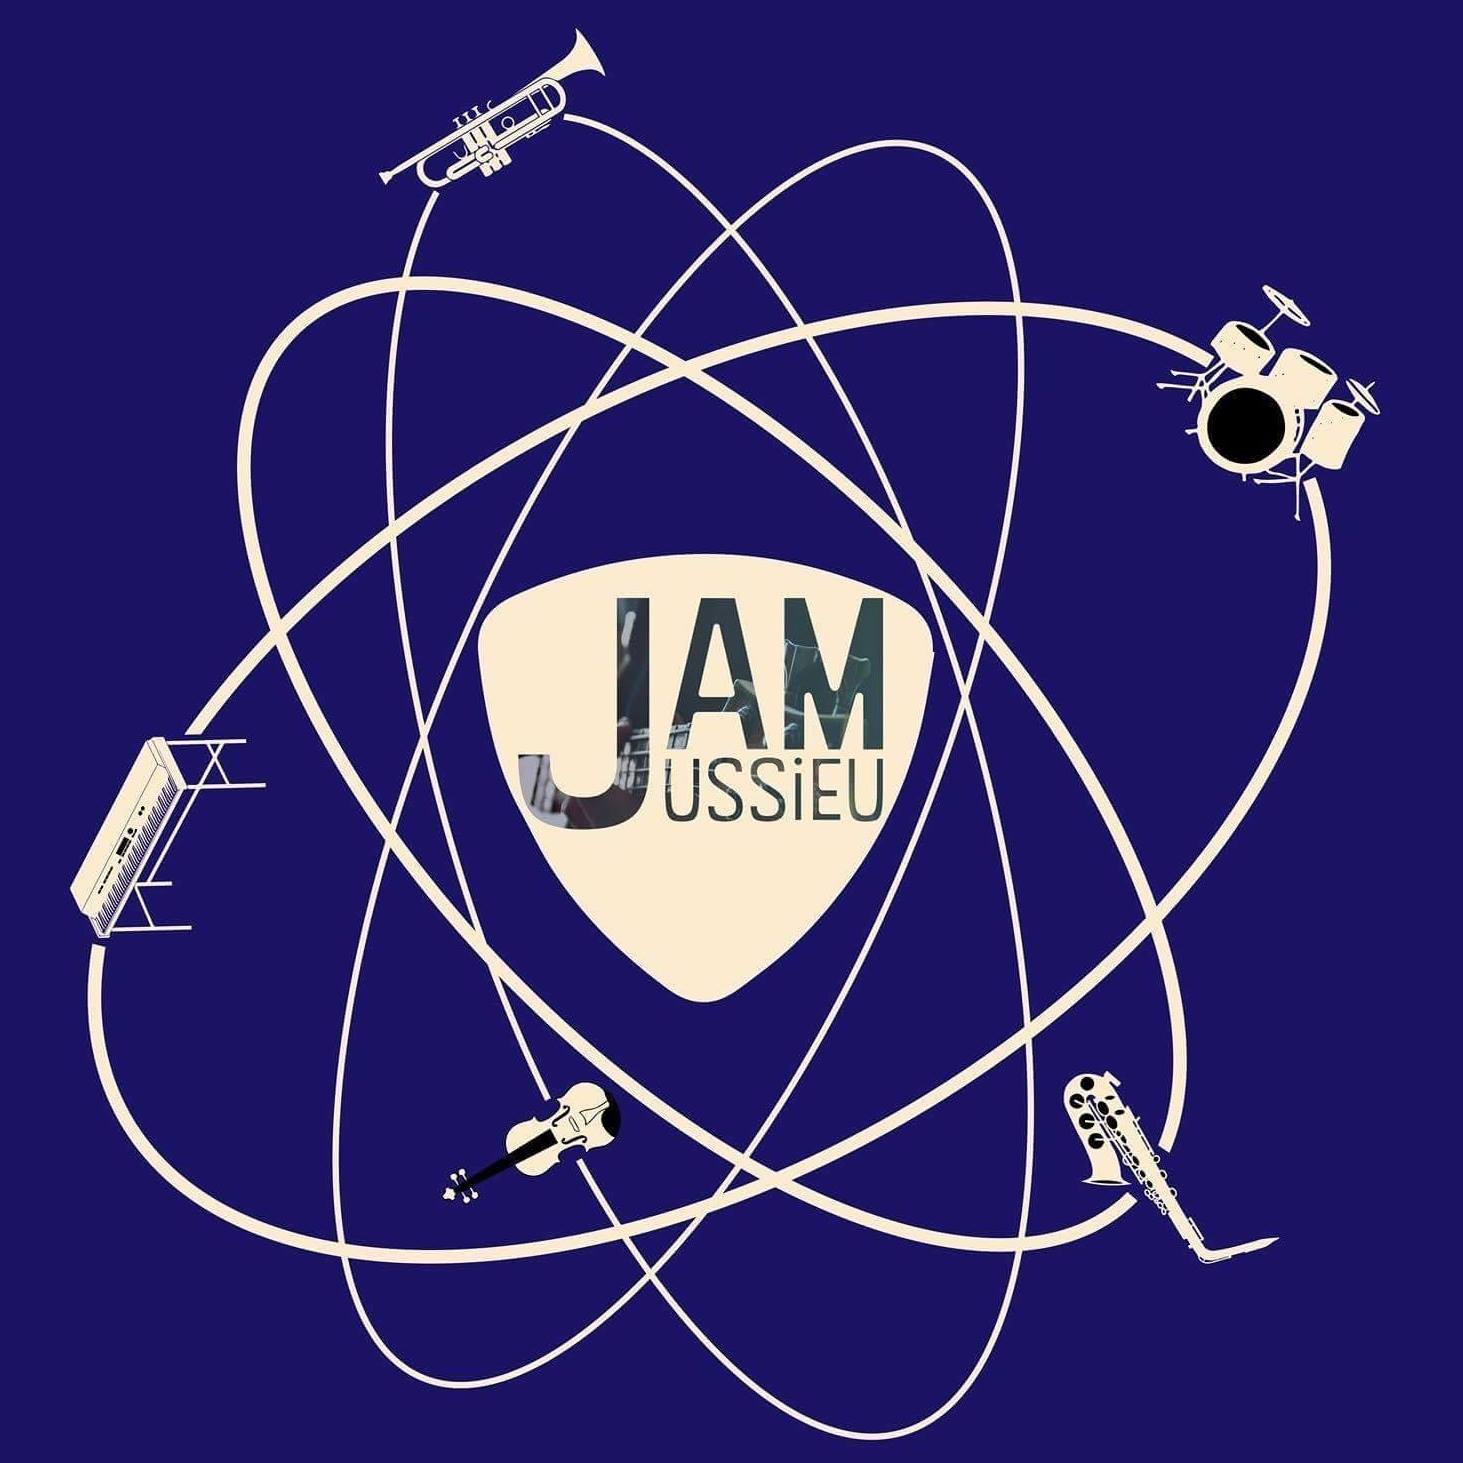 Jam Jussie logo